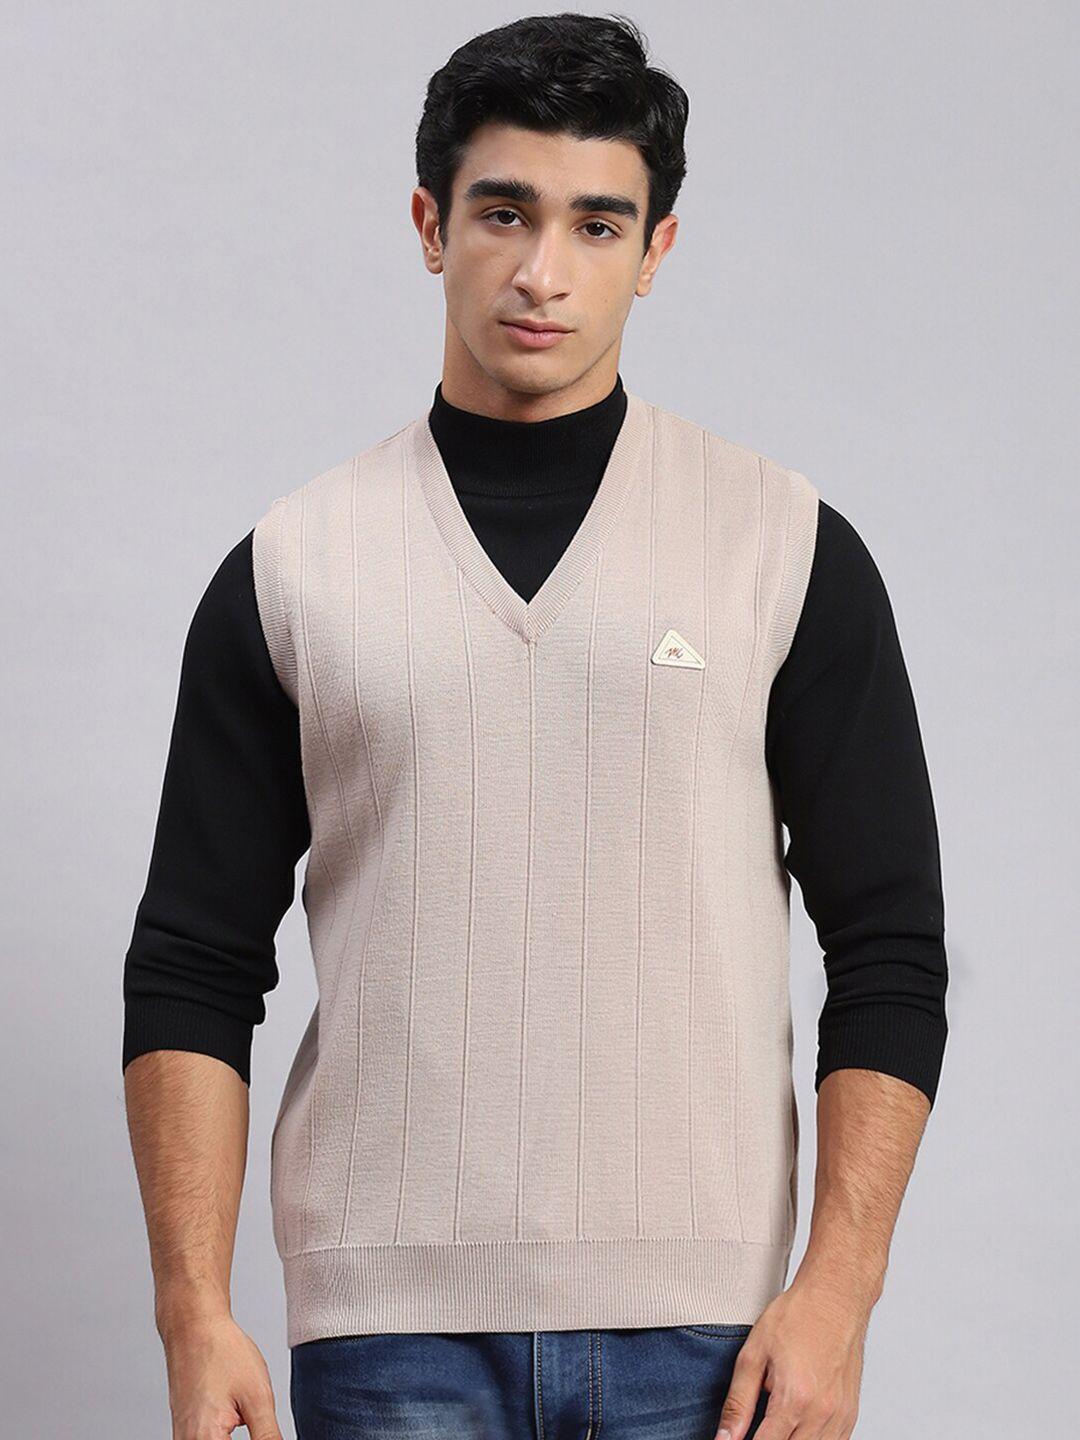 monte-carlo-striped-v-neck-sleeveless-pure-wool-sweater-vest